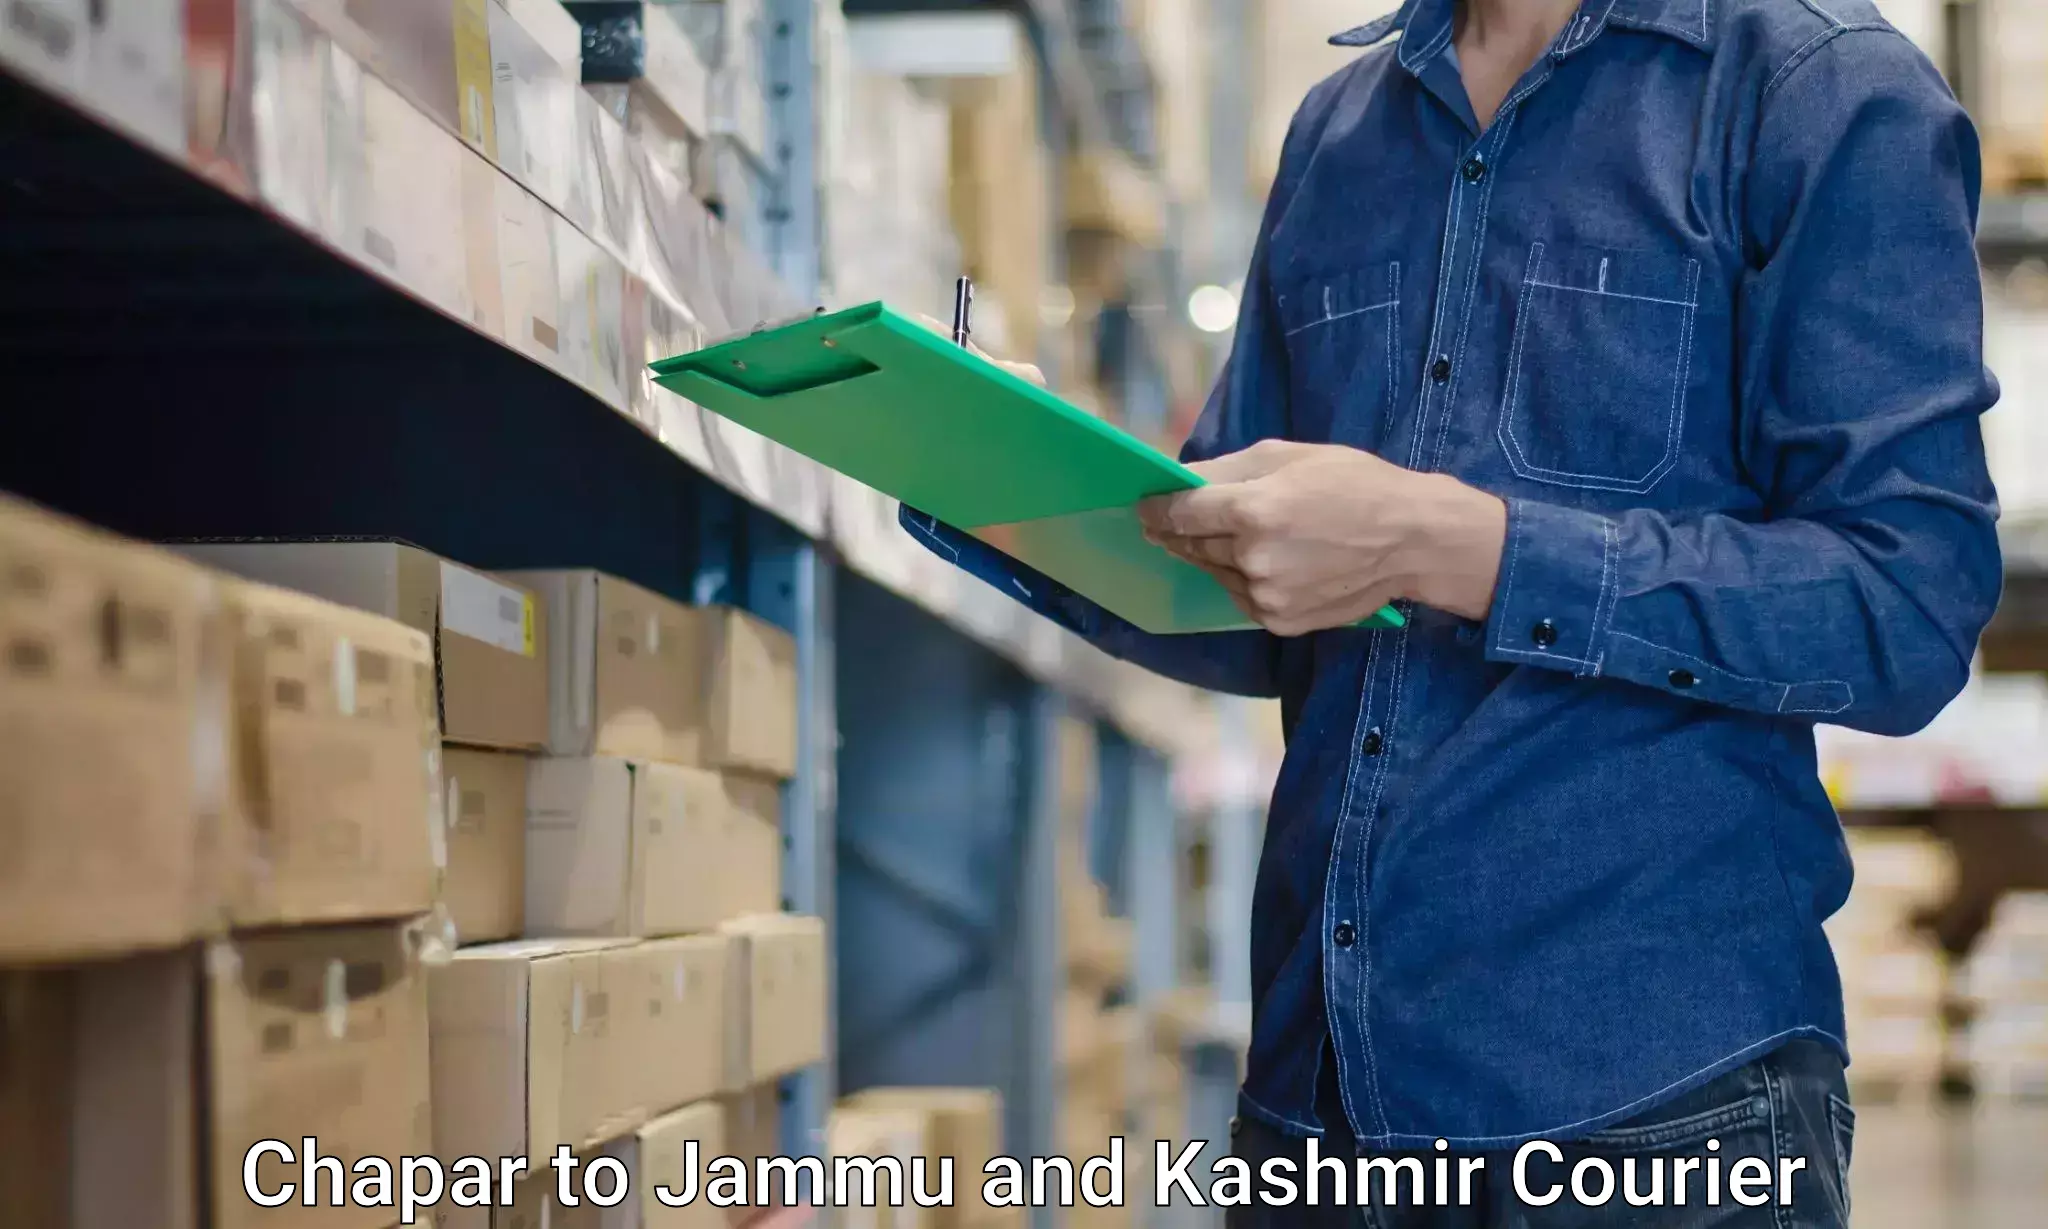 Household goods transporters Chapar to Jammu and Kashmir